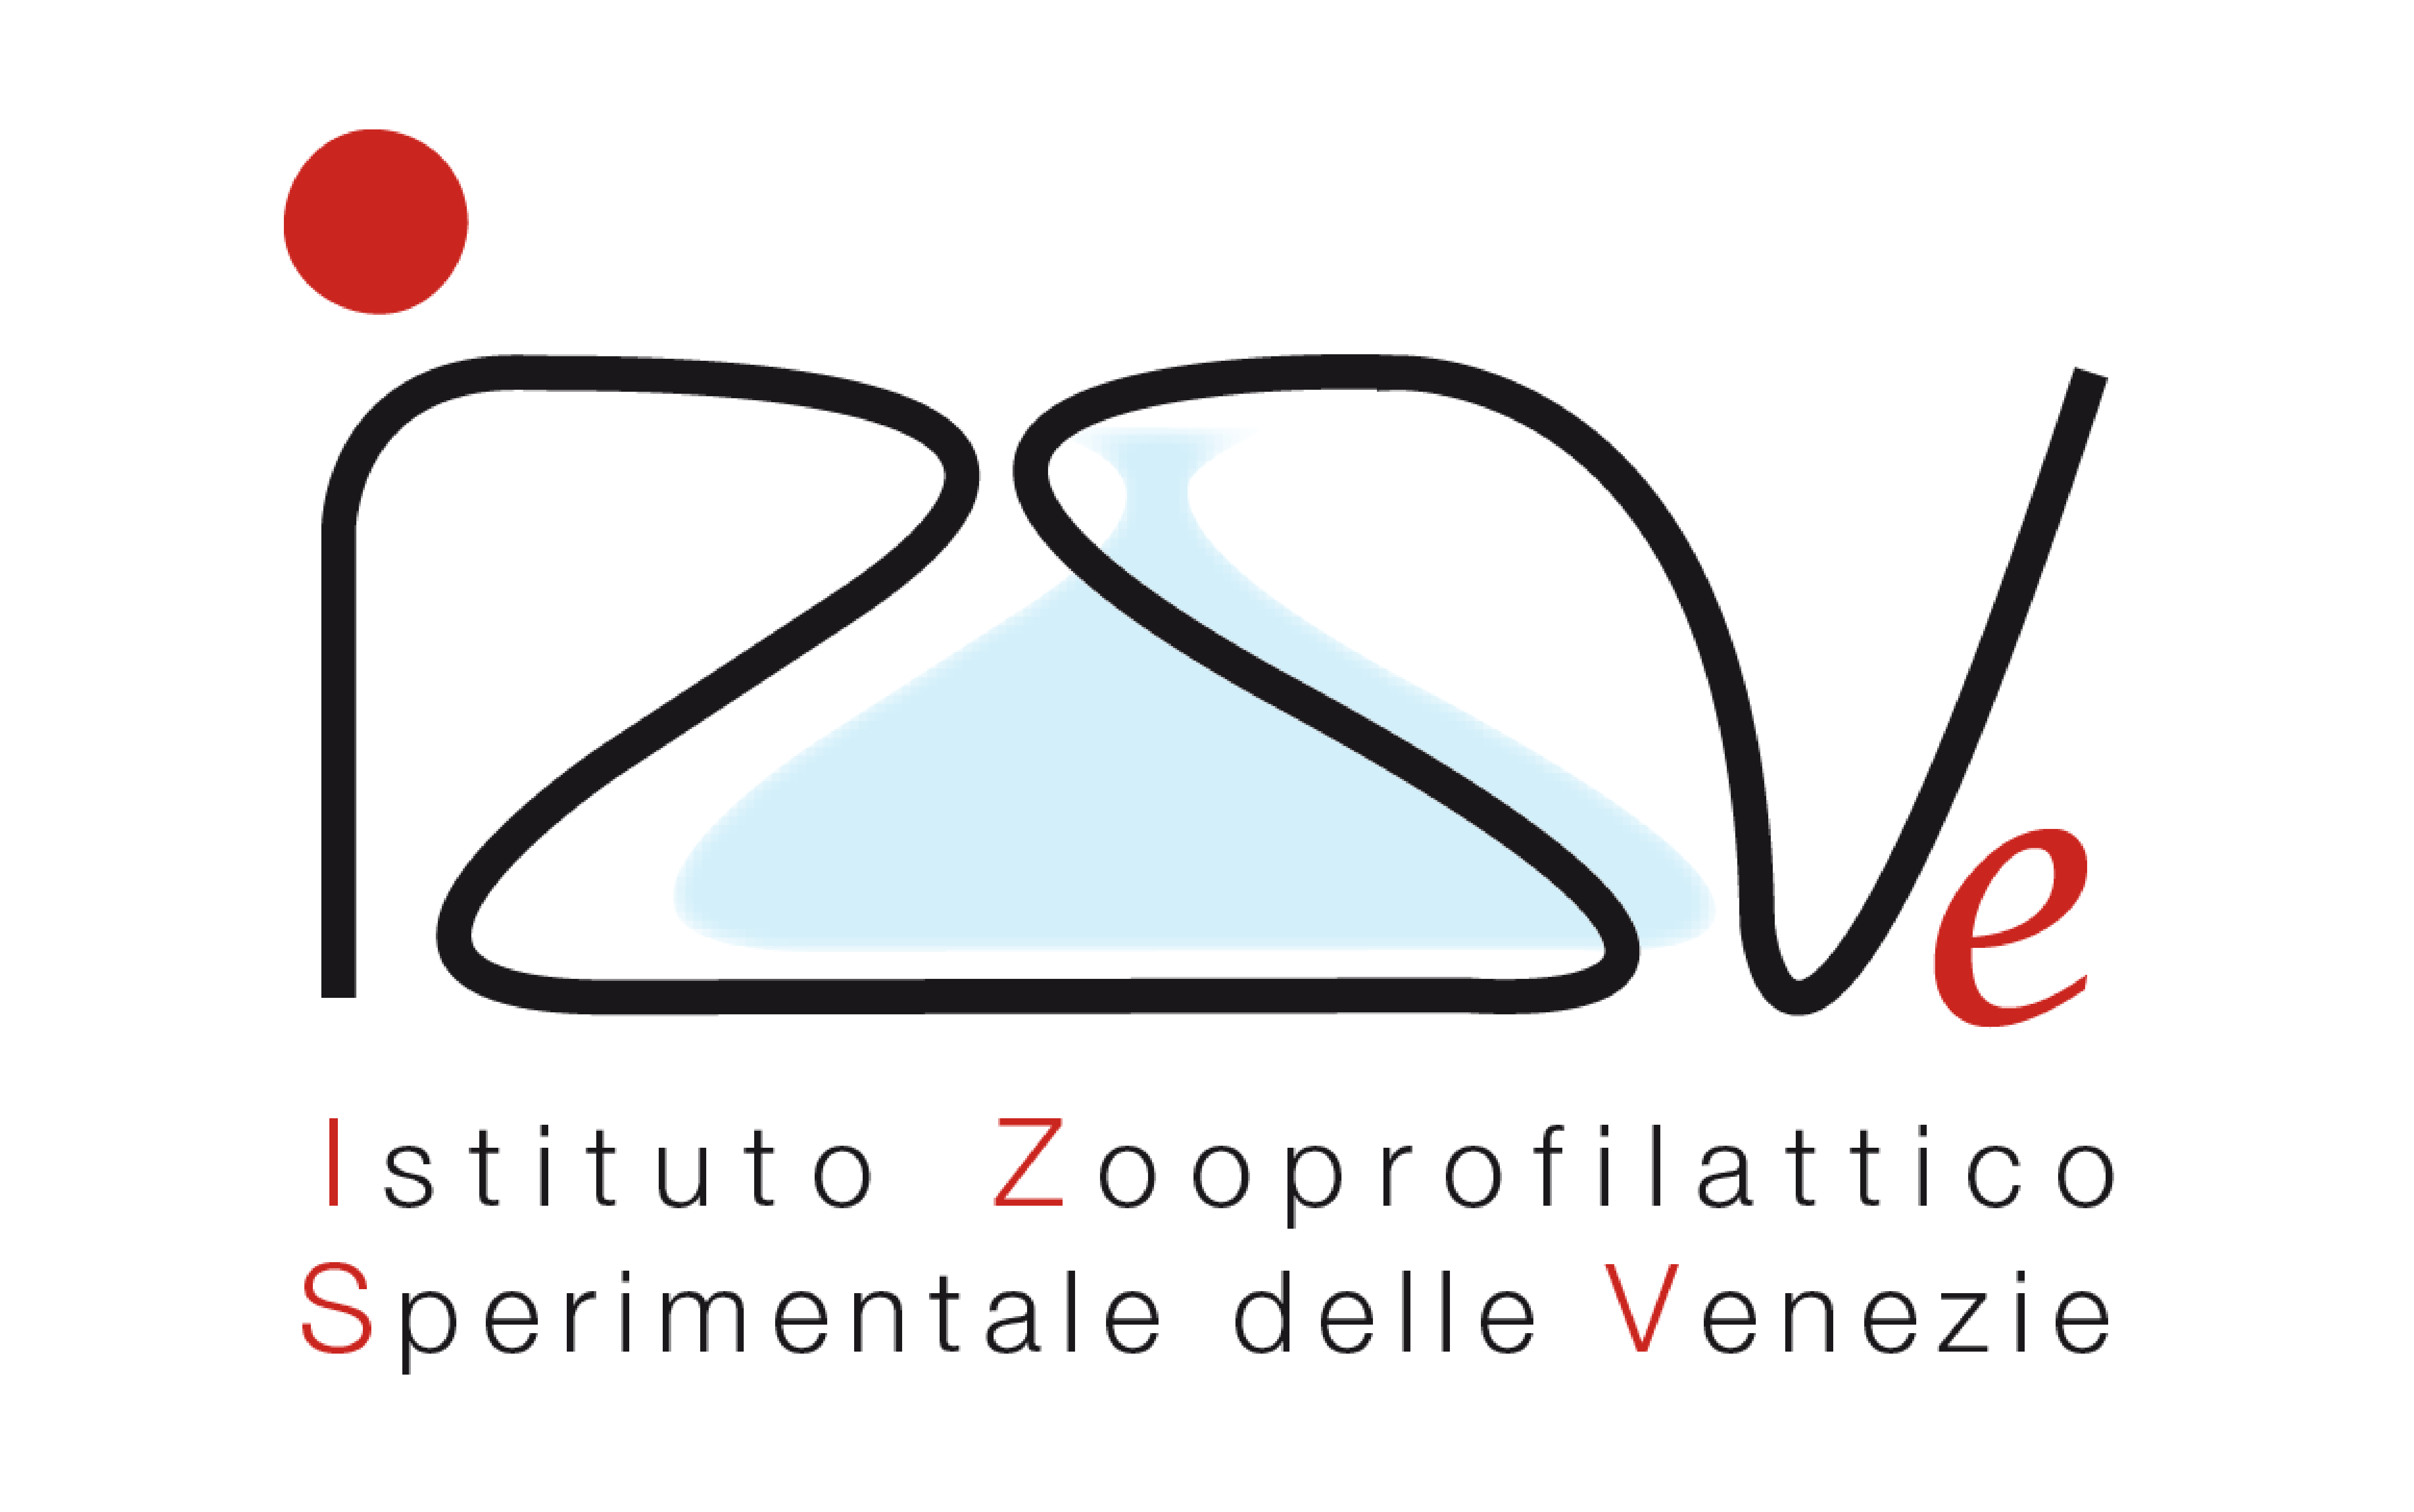 Istituto Zooprofilattico Sperimentale delle Venezie (IZSVe) logo